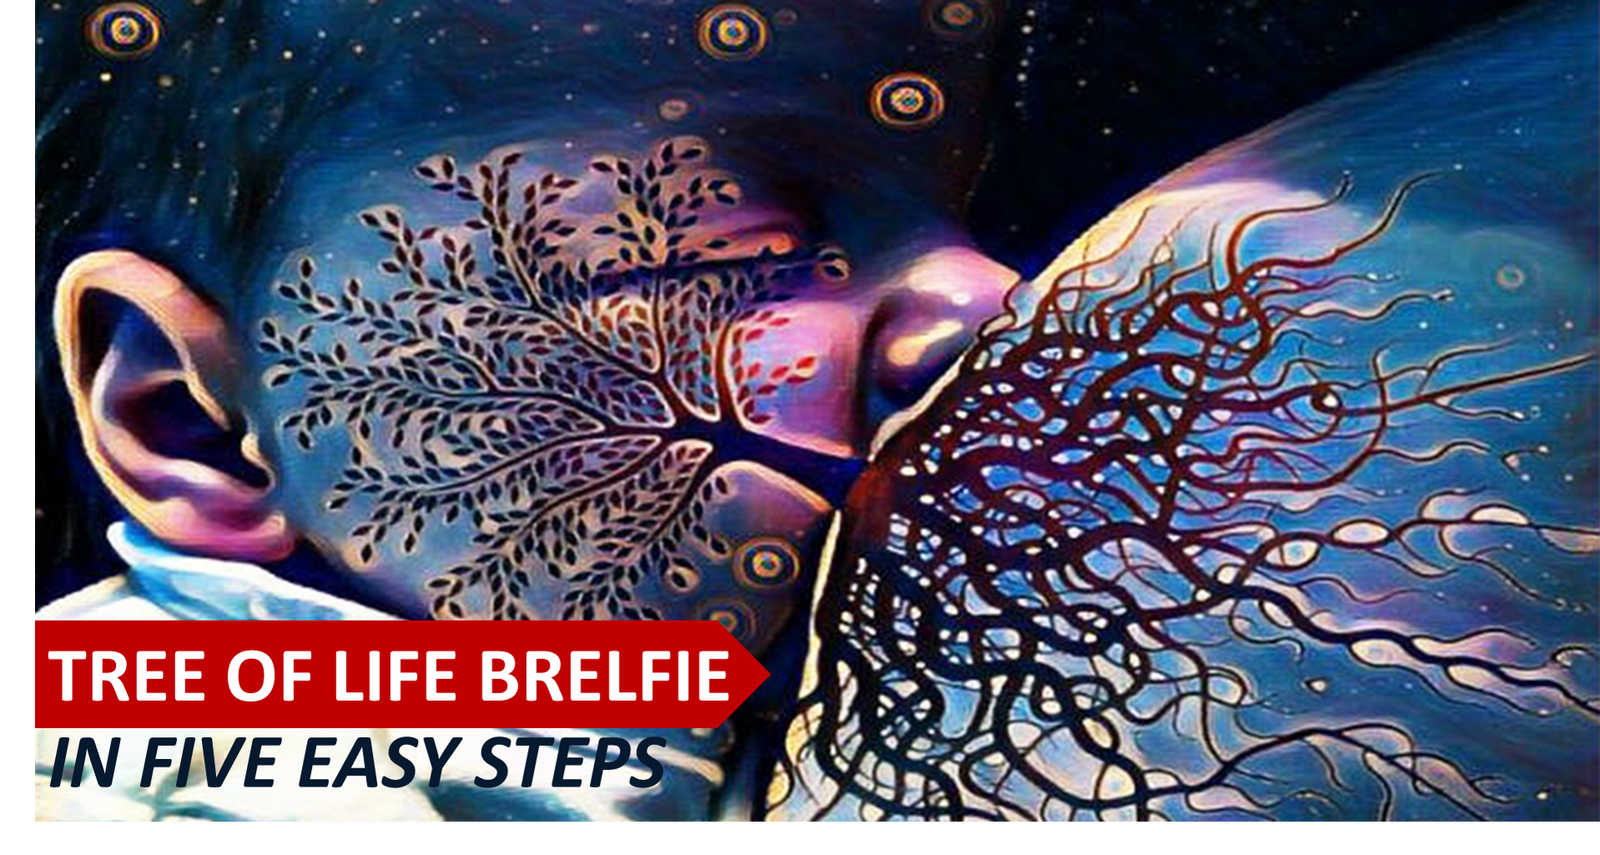 Tree of Life 'Brelfies’: Make Yours in 5 Steps!